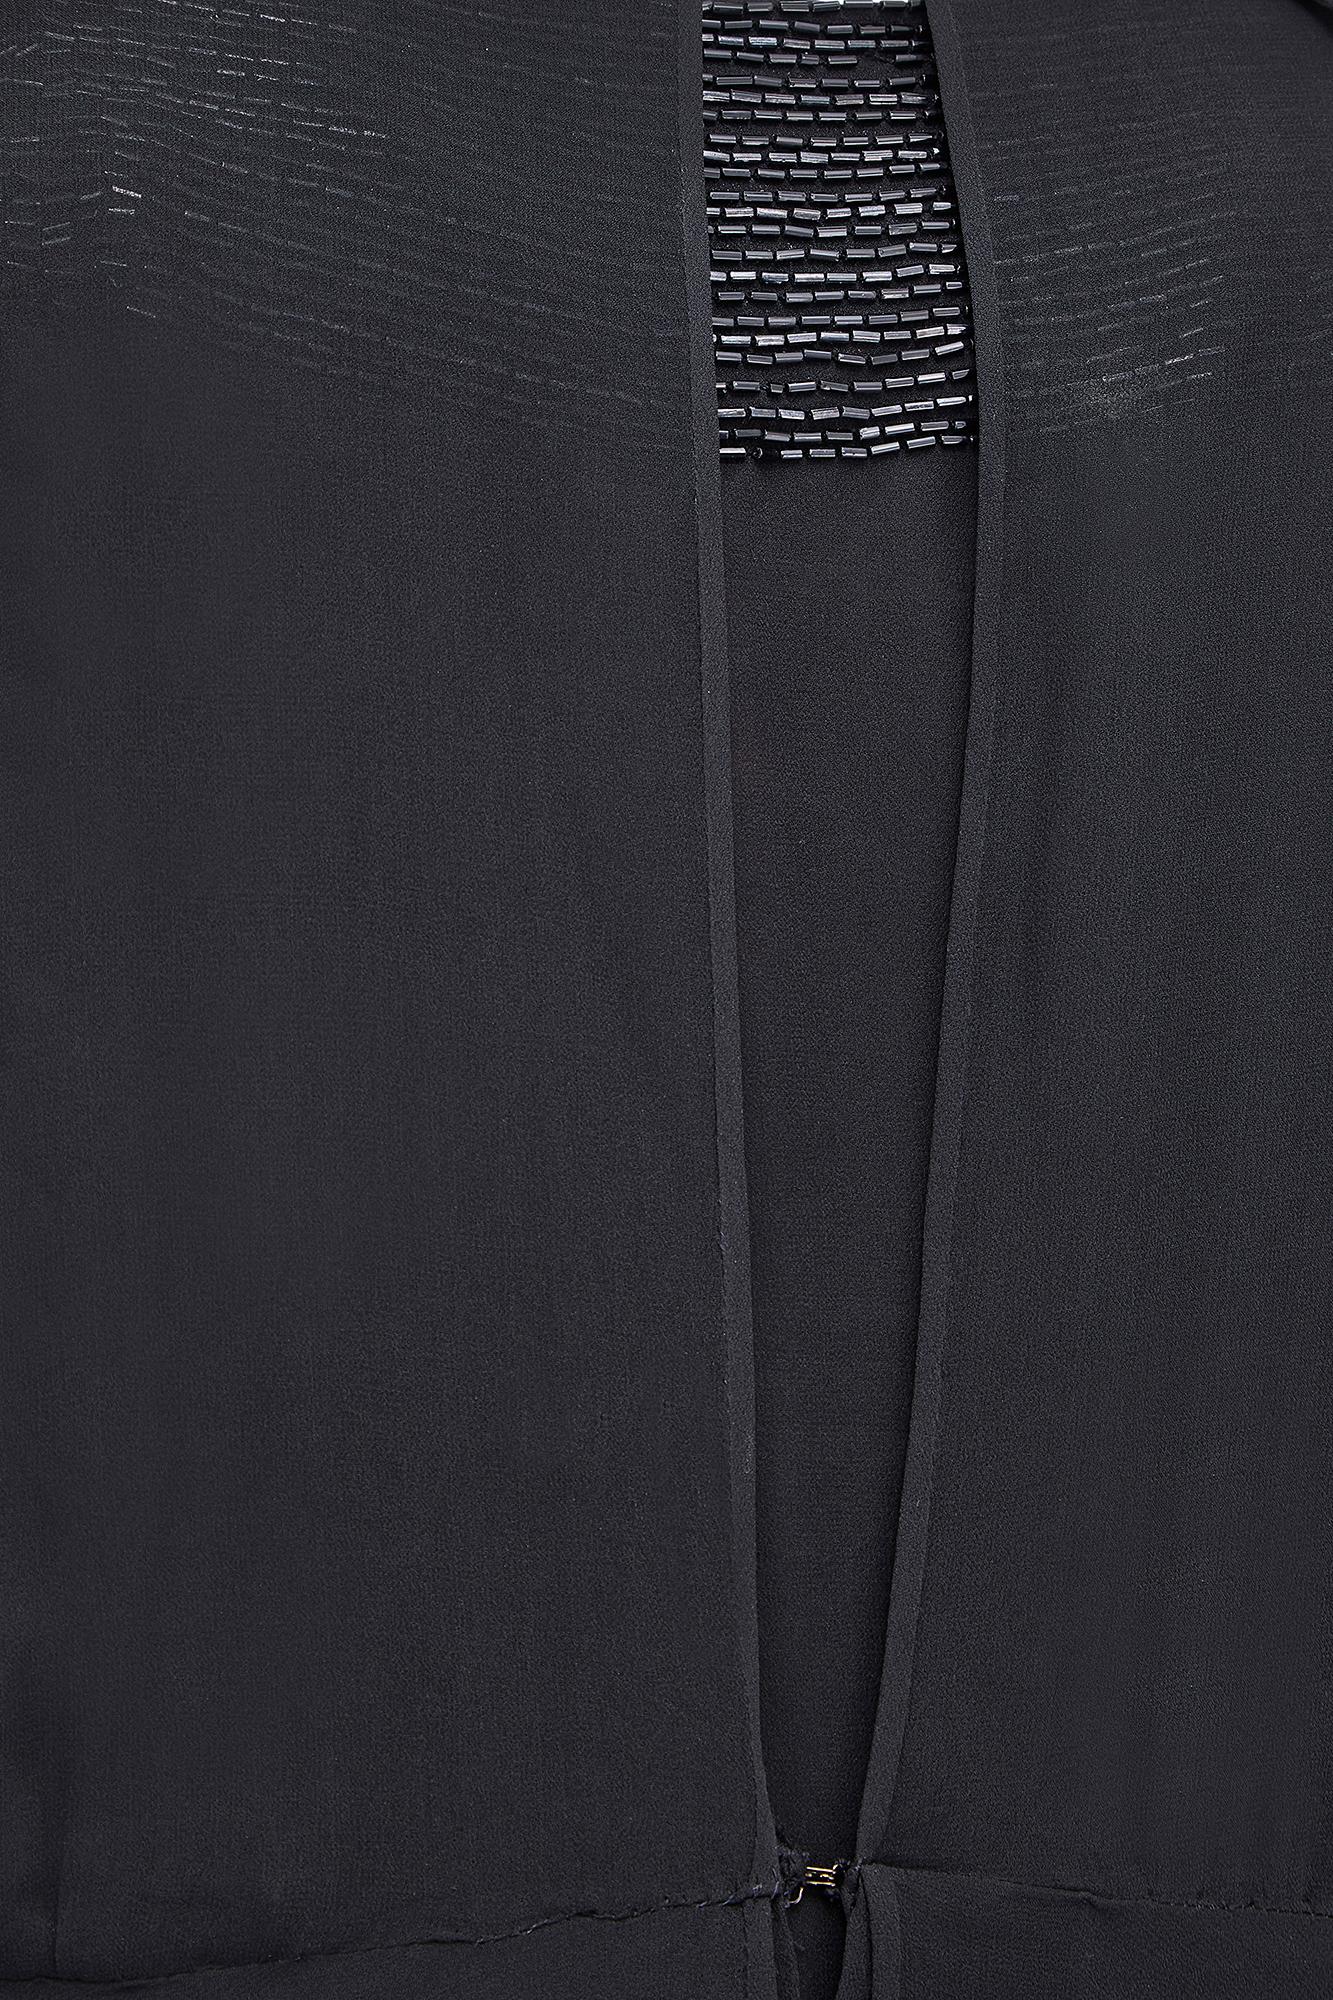 1960s Jacqueline Godard Couture Black Silk Chiffon Dress Ensemble For Sale 2